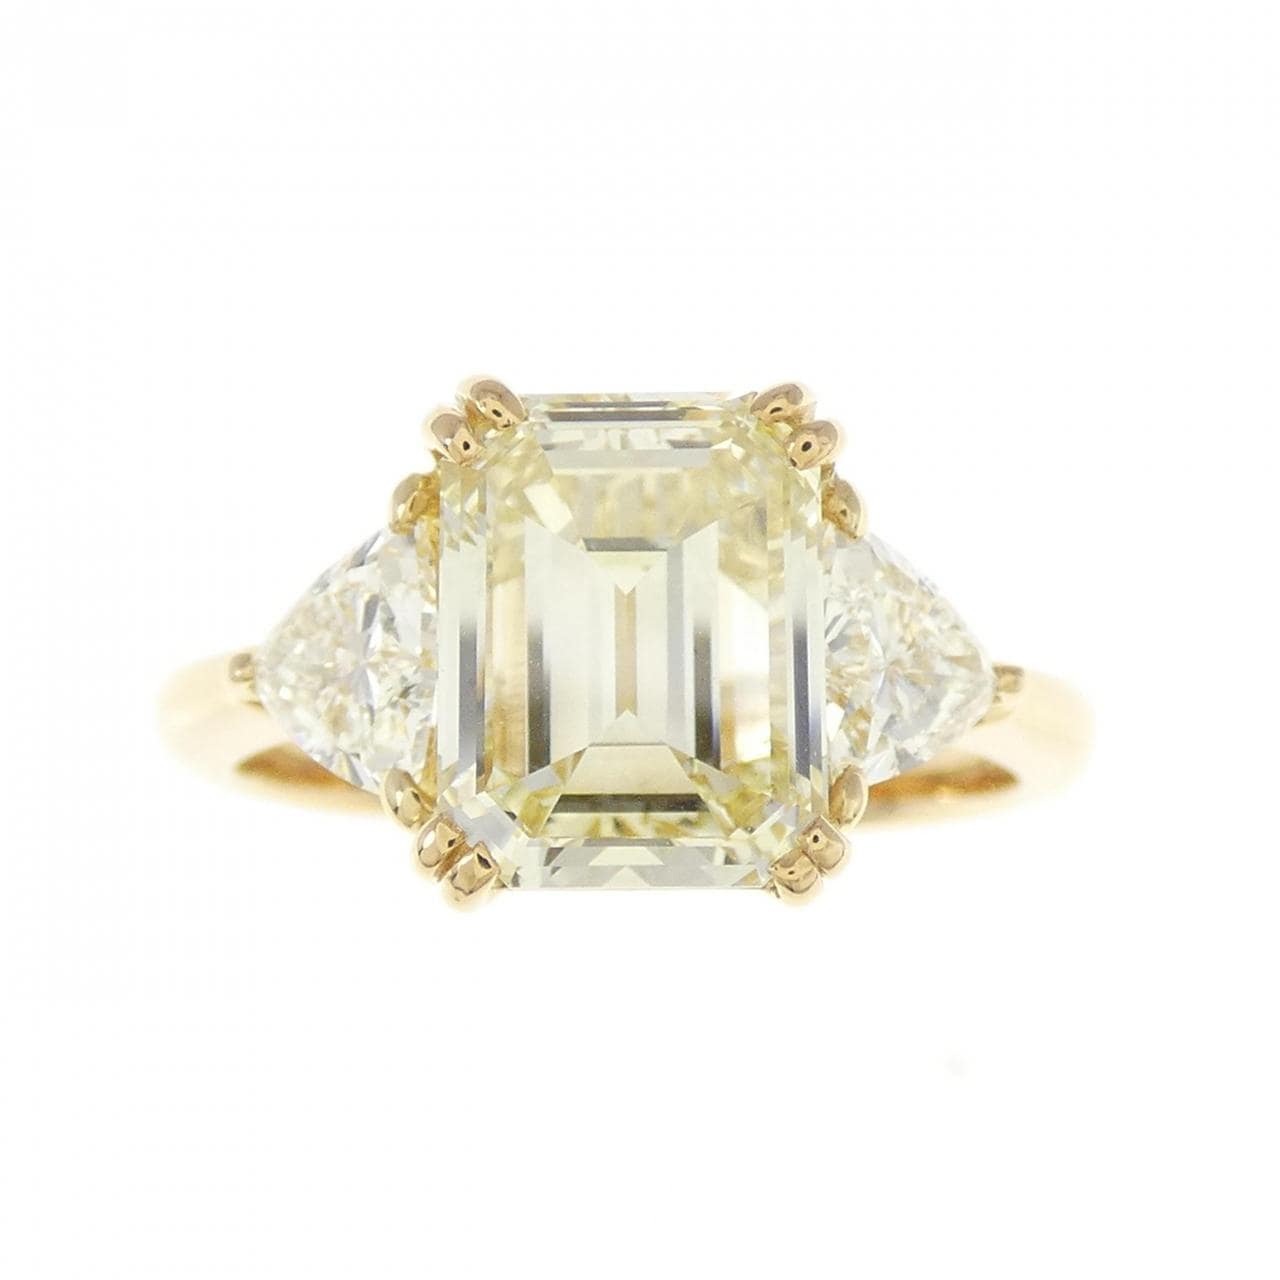 K18YG Diamond Ring 2.555CT LY VS1 Emerald Cut